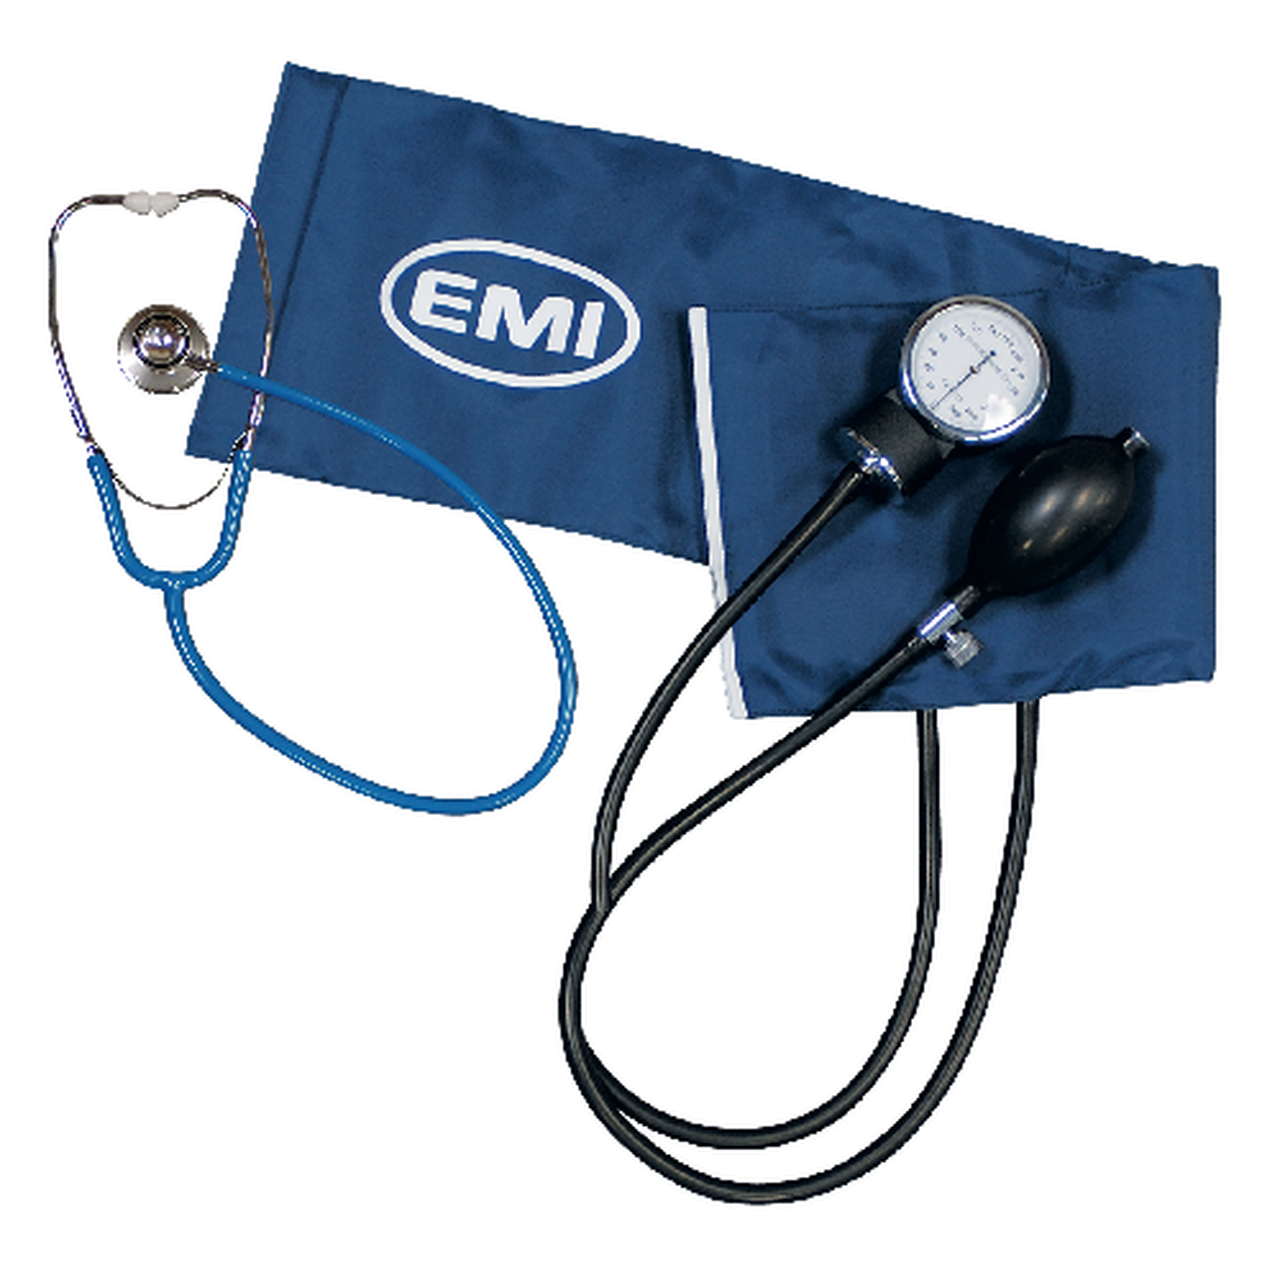 EMI Dual Head Stethoscope